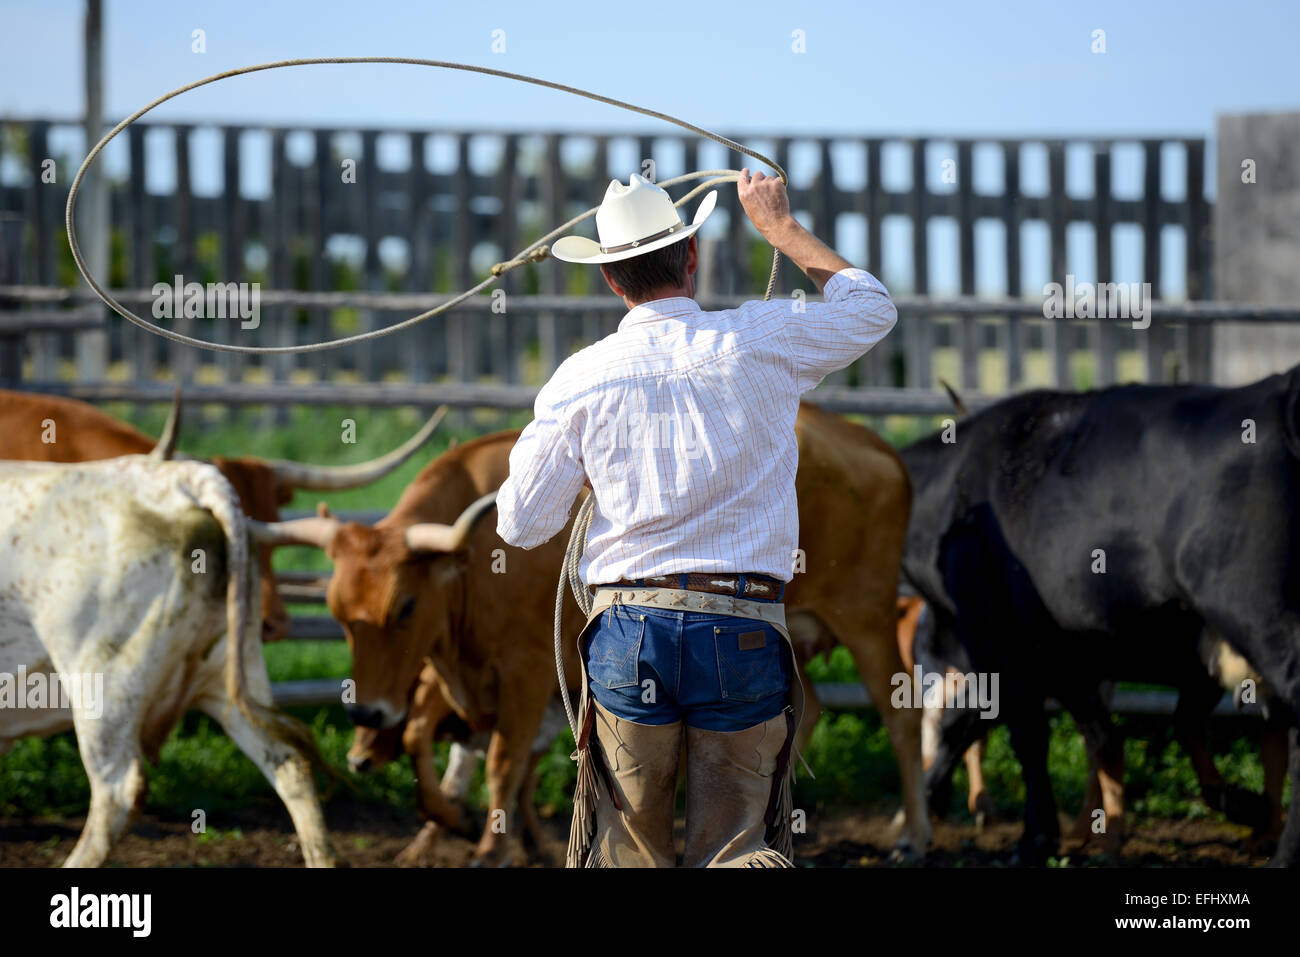 Cowboy with lasso, George Gaber, owner of La Reata Ranch, Saskatchewan, Canada Stock Photo